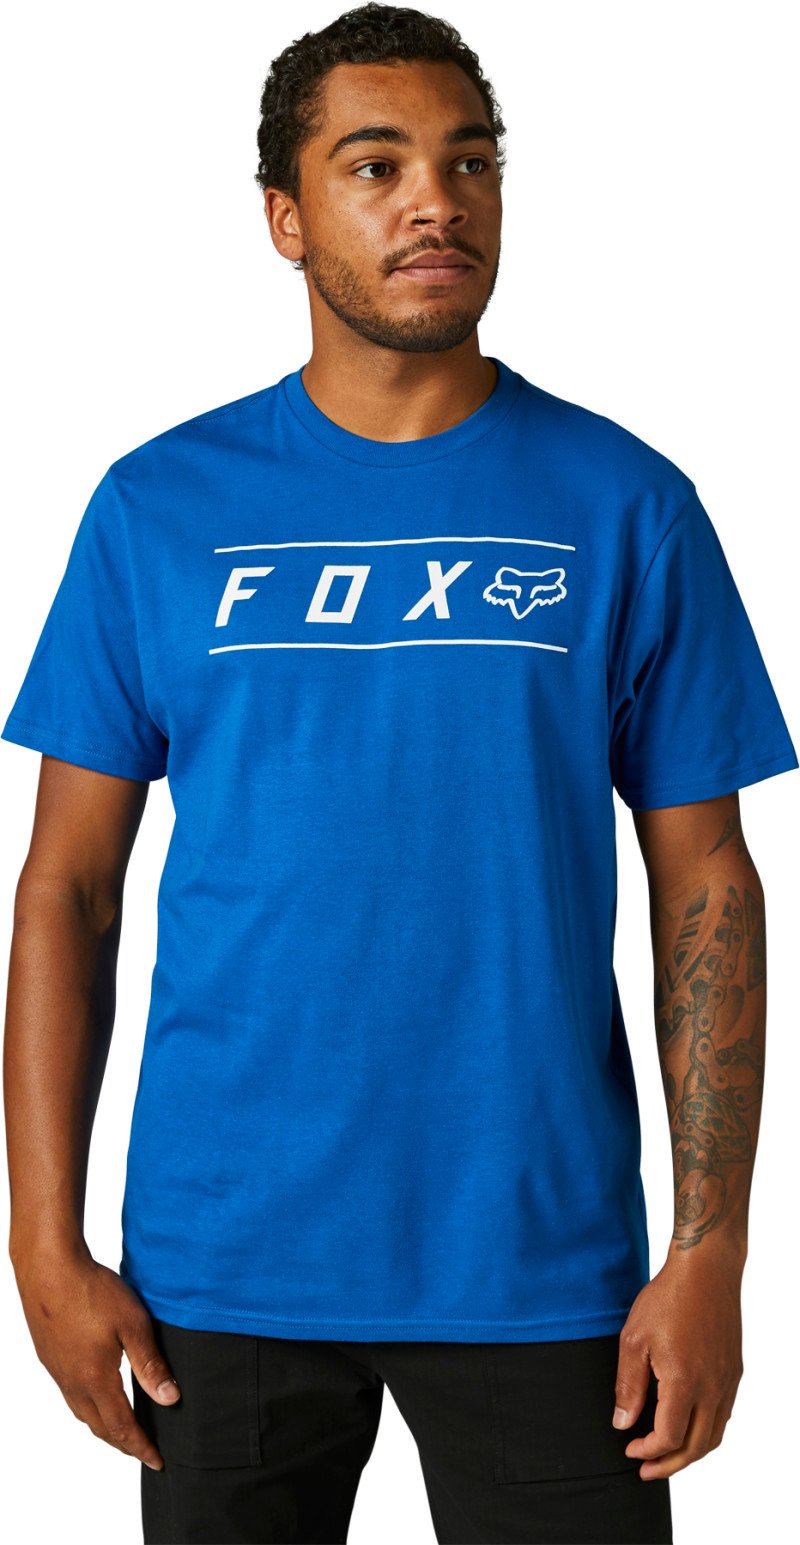 fox racing t-shirt shirts for men pinnacle premium